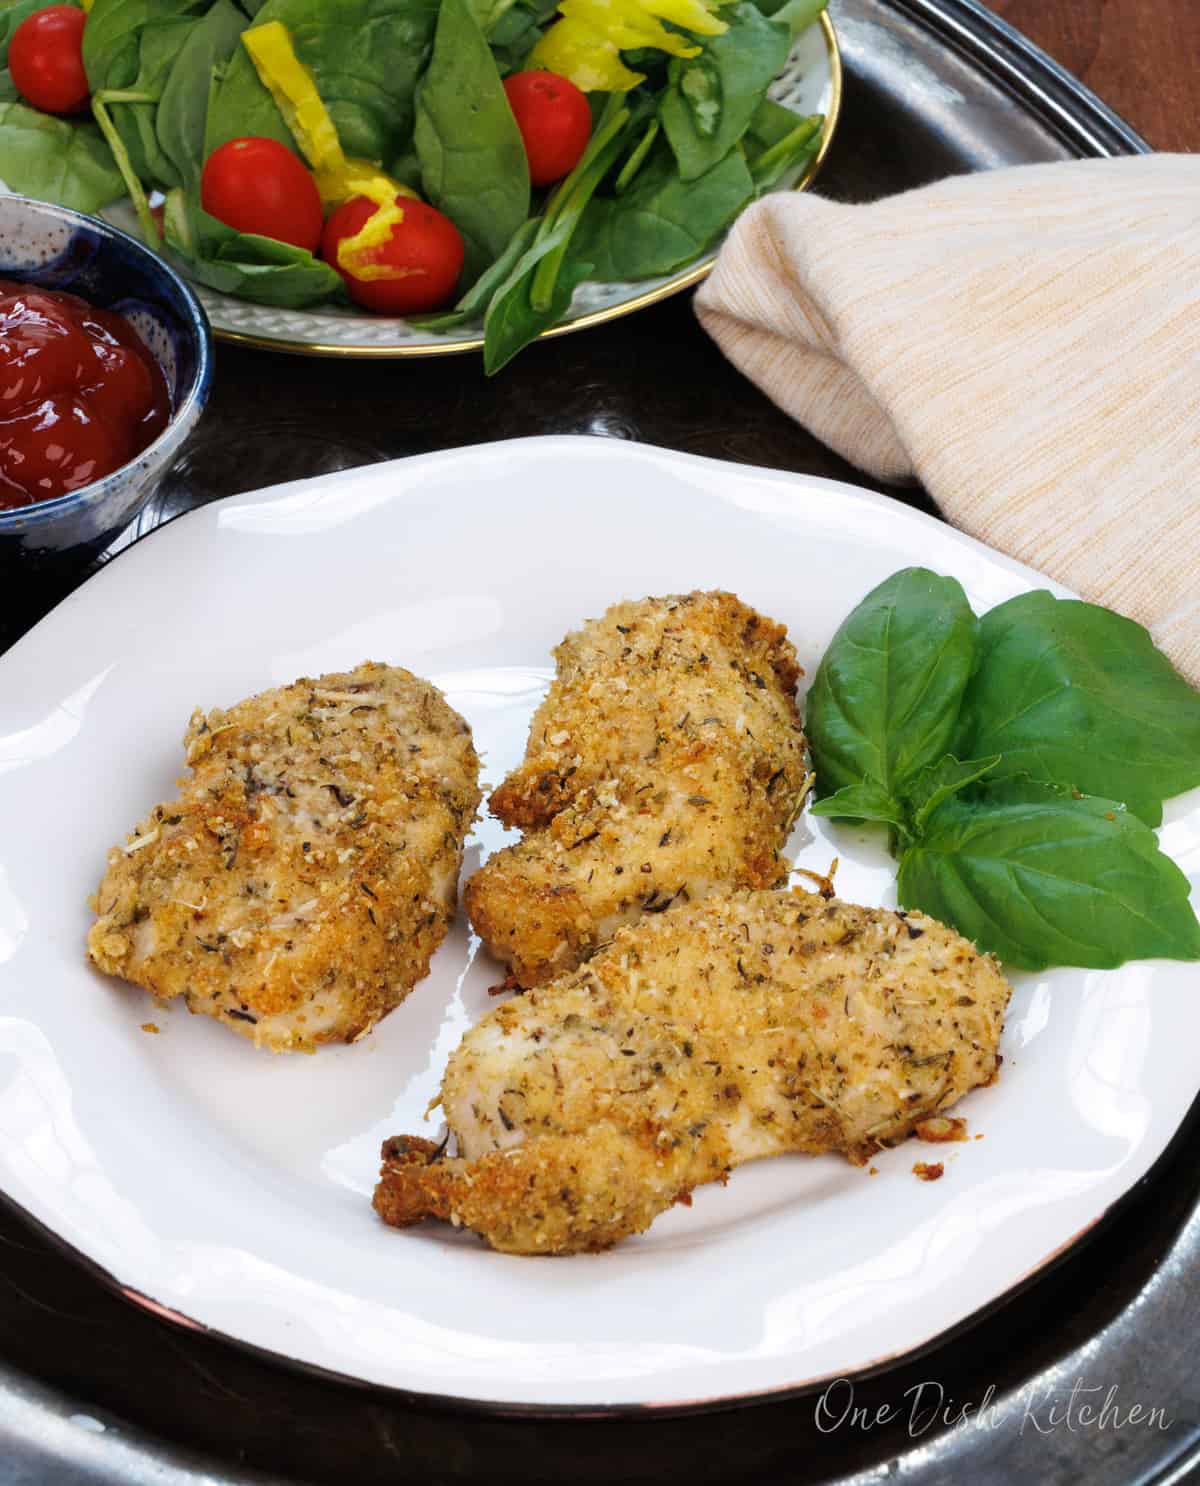 https://onedishkitchen.com/wp-content/uploads/2022/07/baked-chicken-tenders-one-dish-kitchen-1.jpg